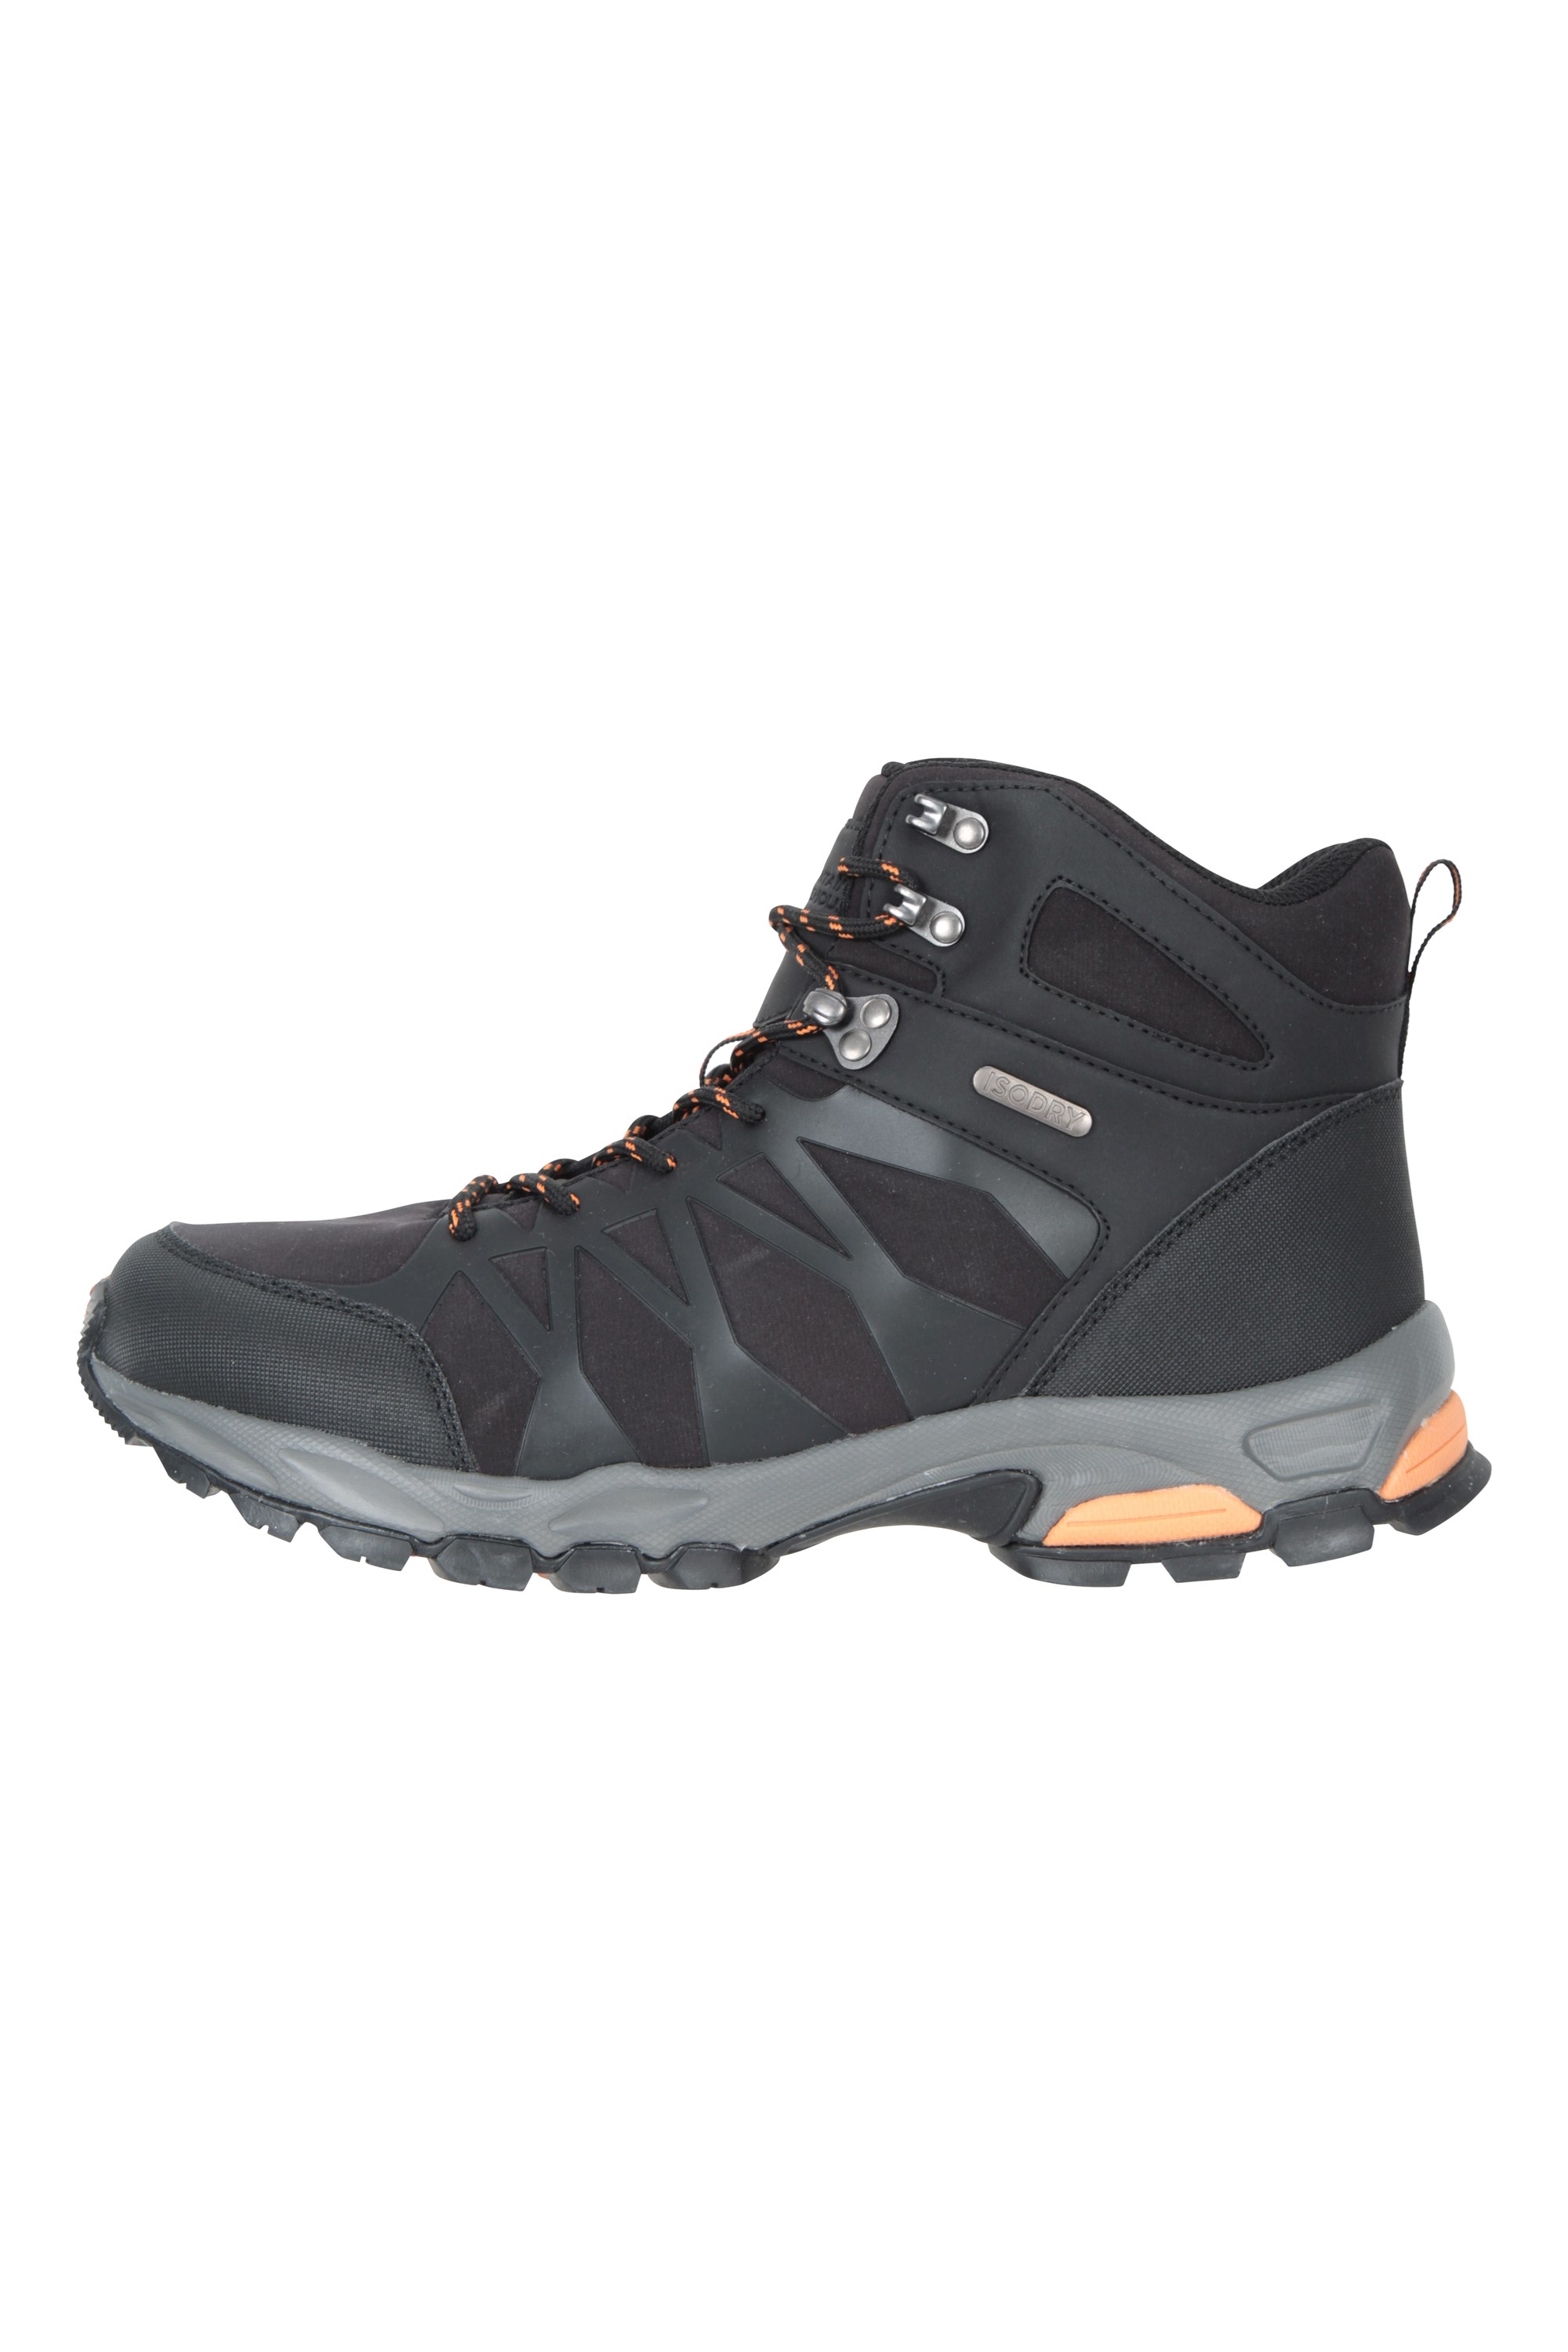 Trekking Mountain Warehouse Mens Waterproof Softshell Hiking Shoes 